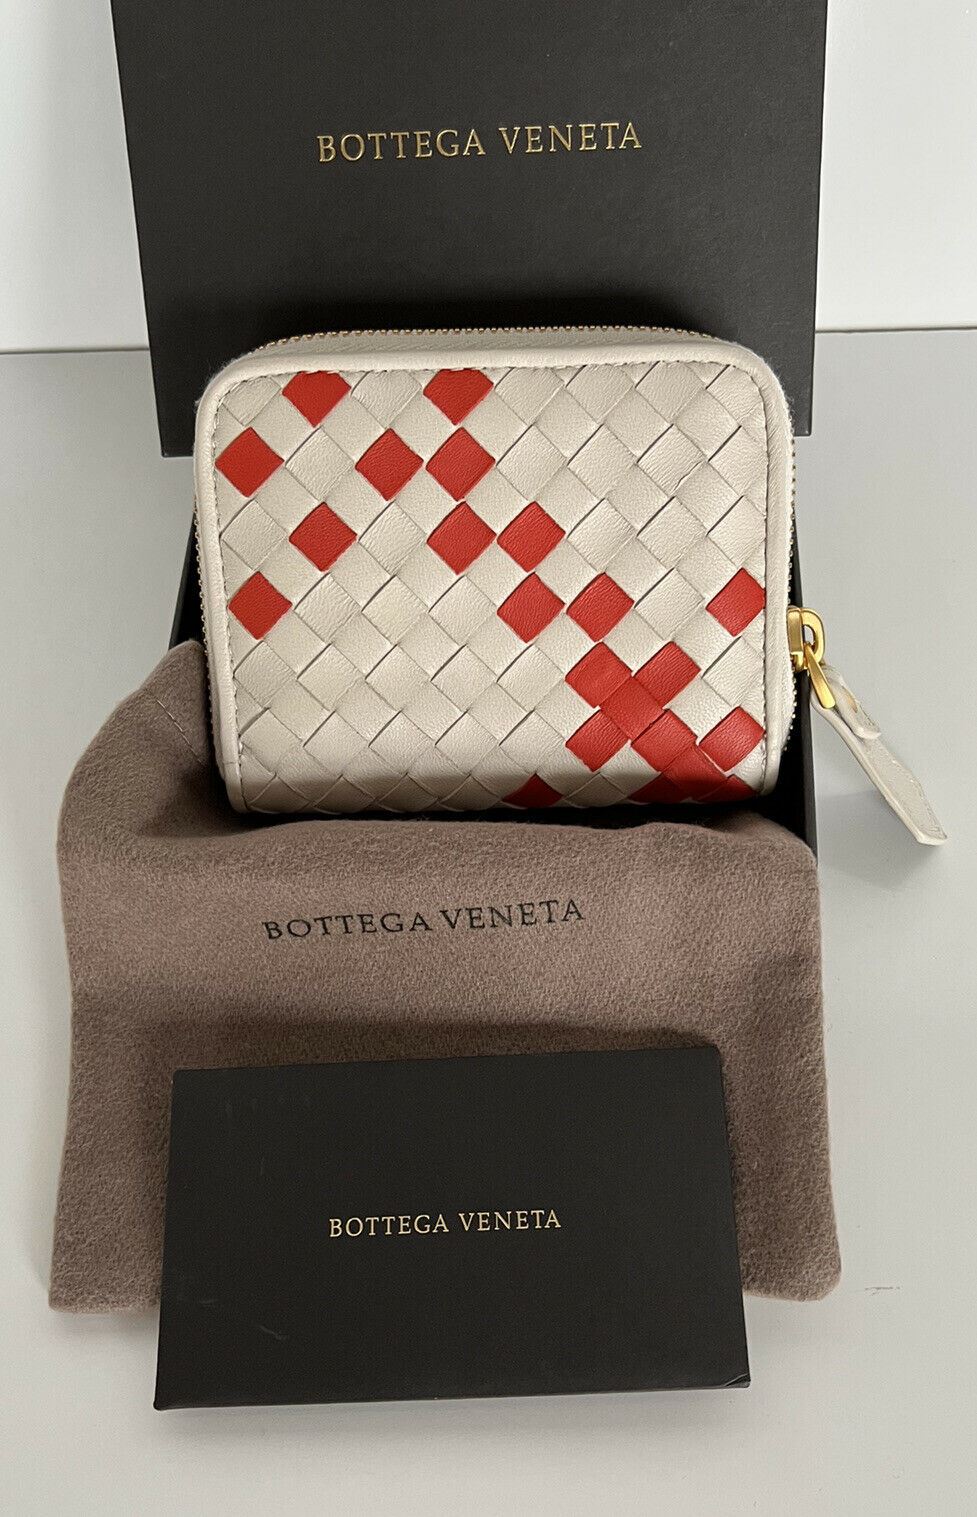 NWT $470 Bottega Veneta Zipper Leather Wallet Coin Purse Mist/Poppy 566512 Italy